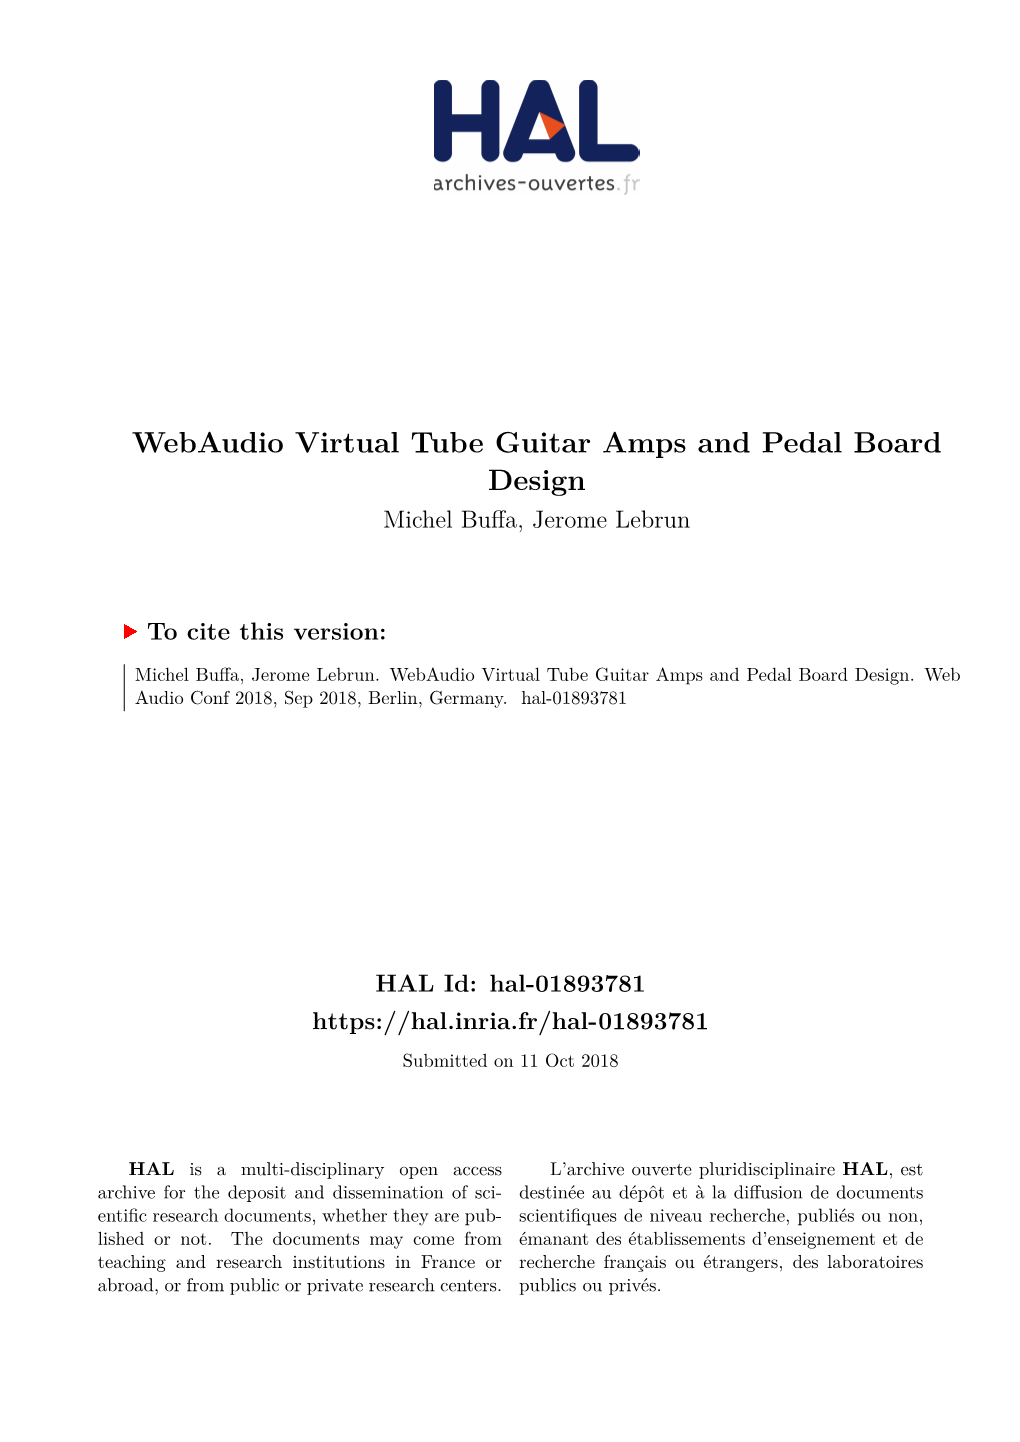 Webaudio Virtual Tube Guitar Amps and Pedal Board Design Michel Buffa, Jerome Lebrun